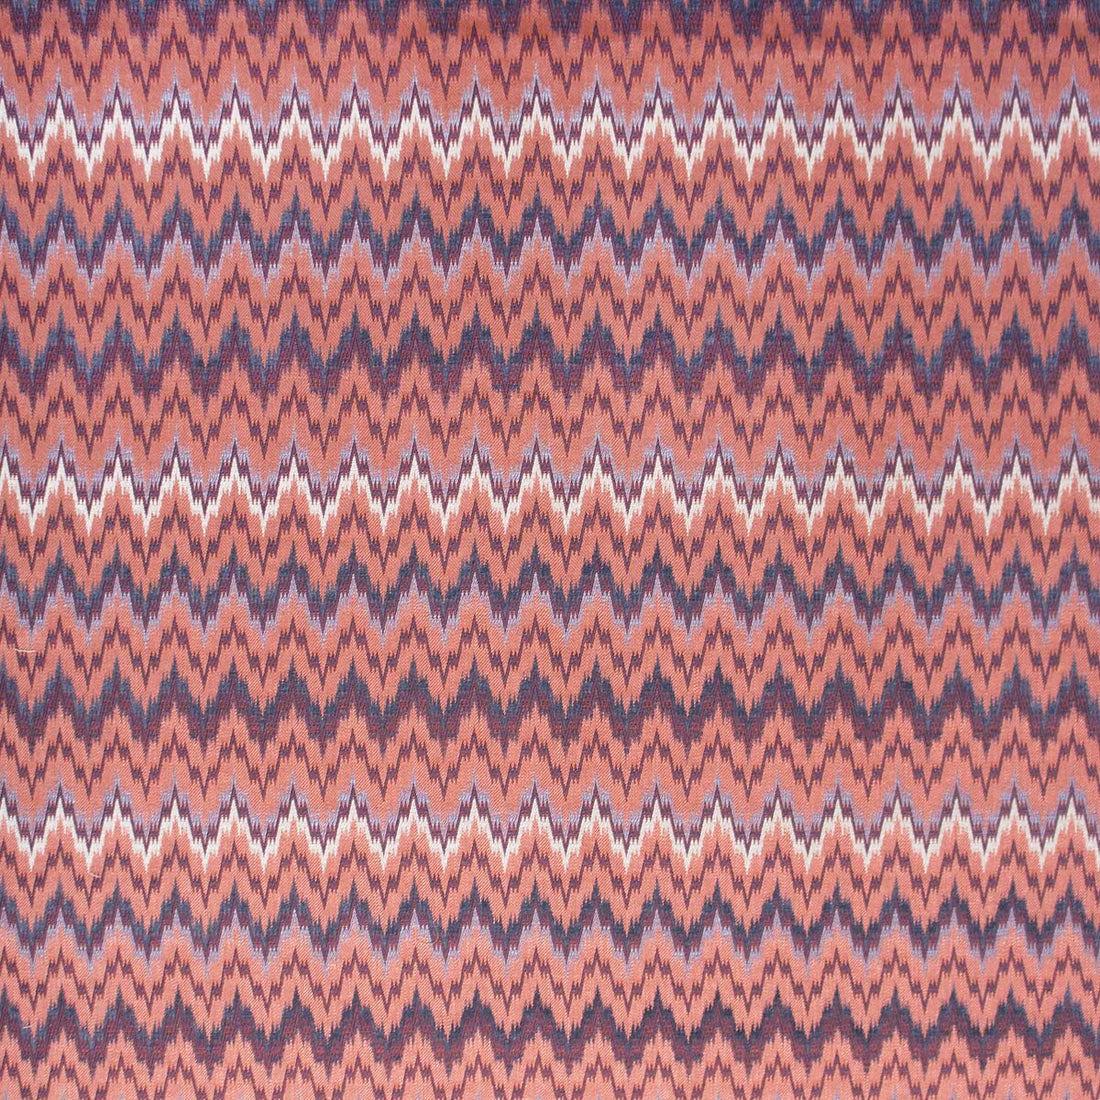 Alaior fabric in rojo color - pattern LCT1106.004.0 - by Gaston y Daniela in the Lorenzo Castillo IX Hesperia collection